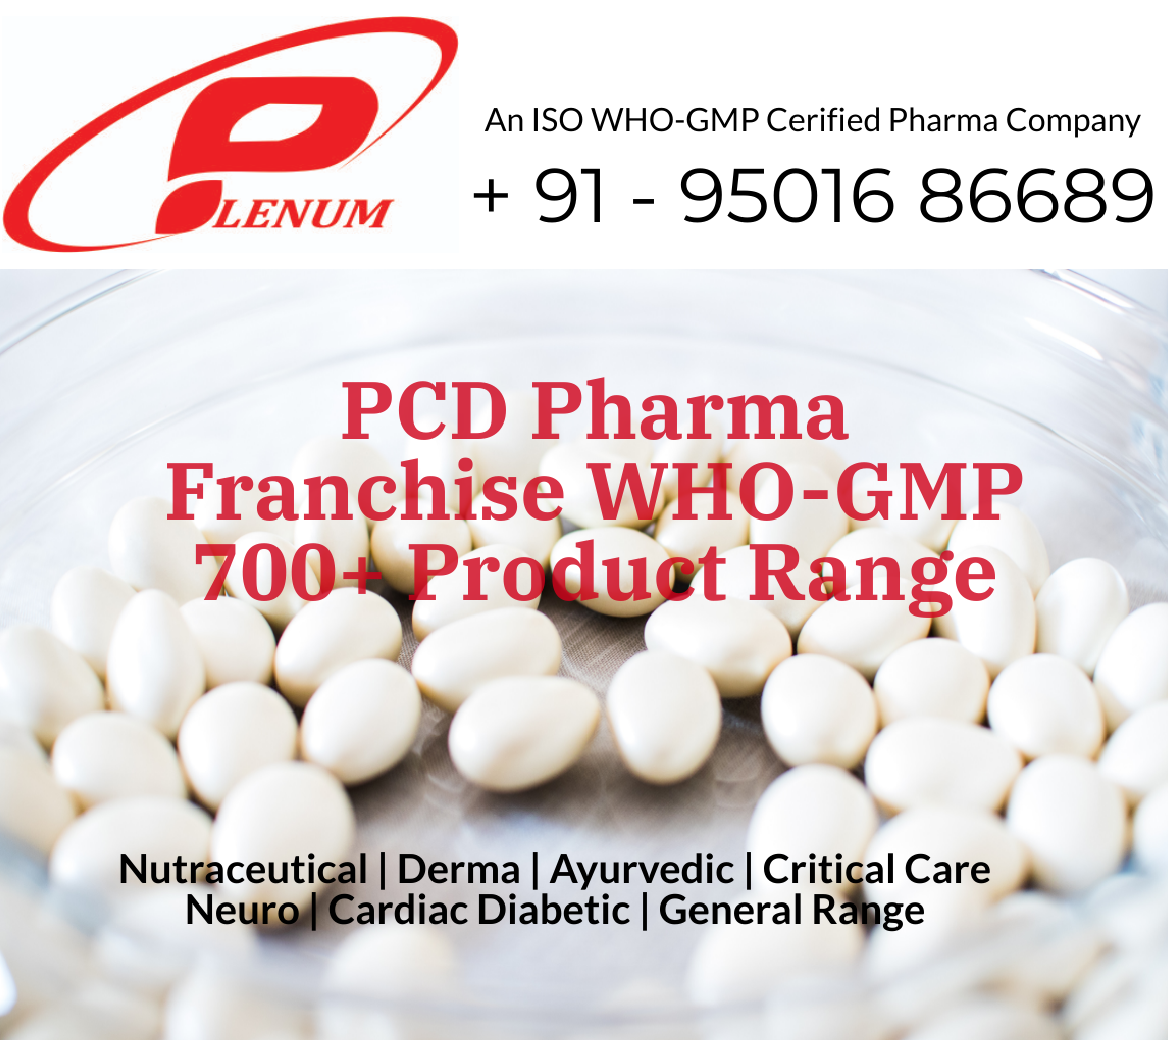 Top Pharma PCD Company in India